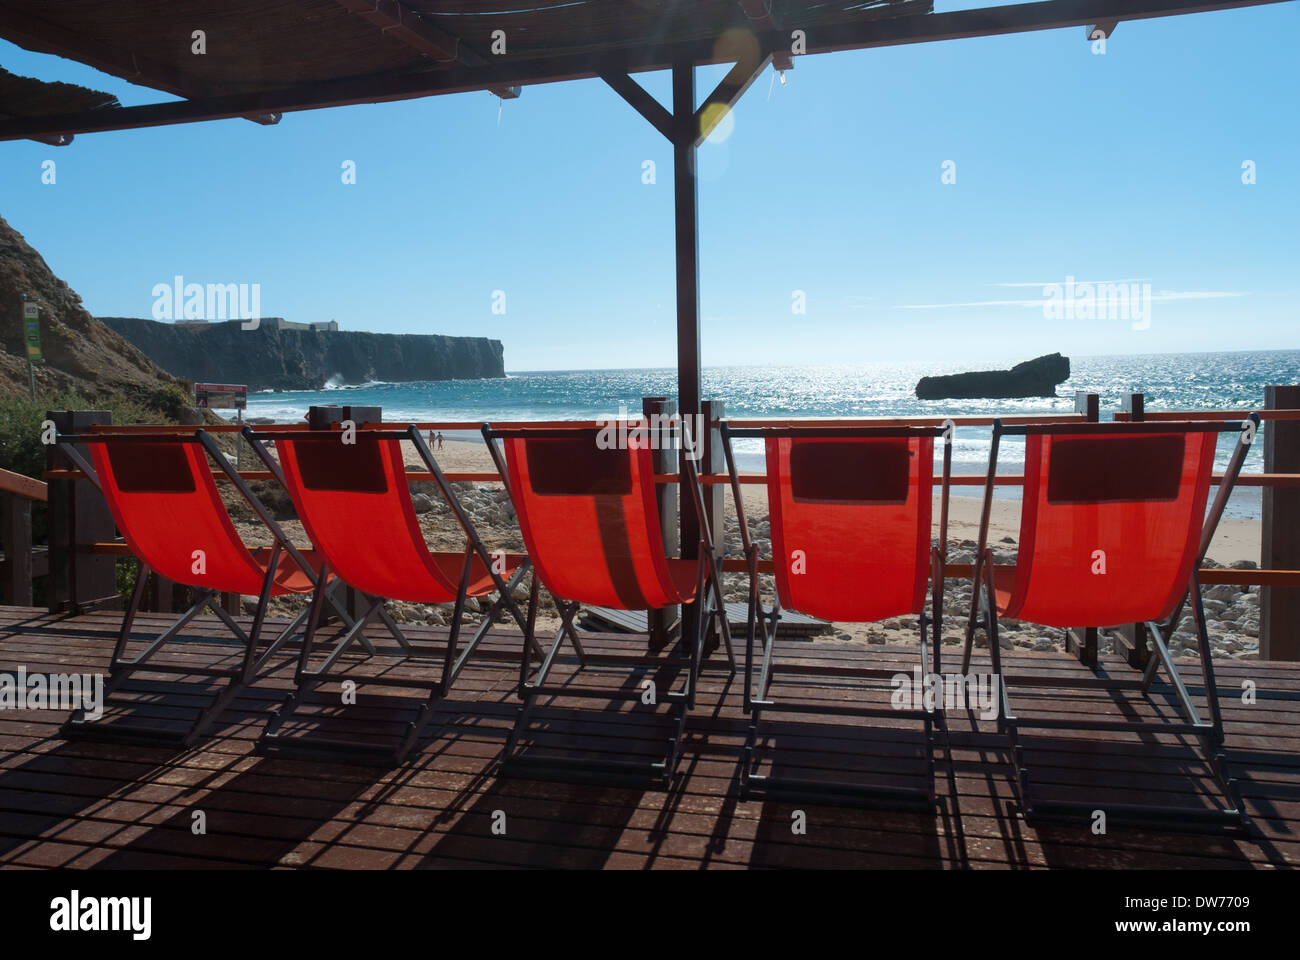 Deck chairs at a beach bar at Praia do Tonel in Portugal's Algarve region. Stock Photo